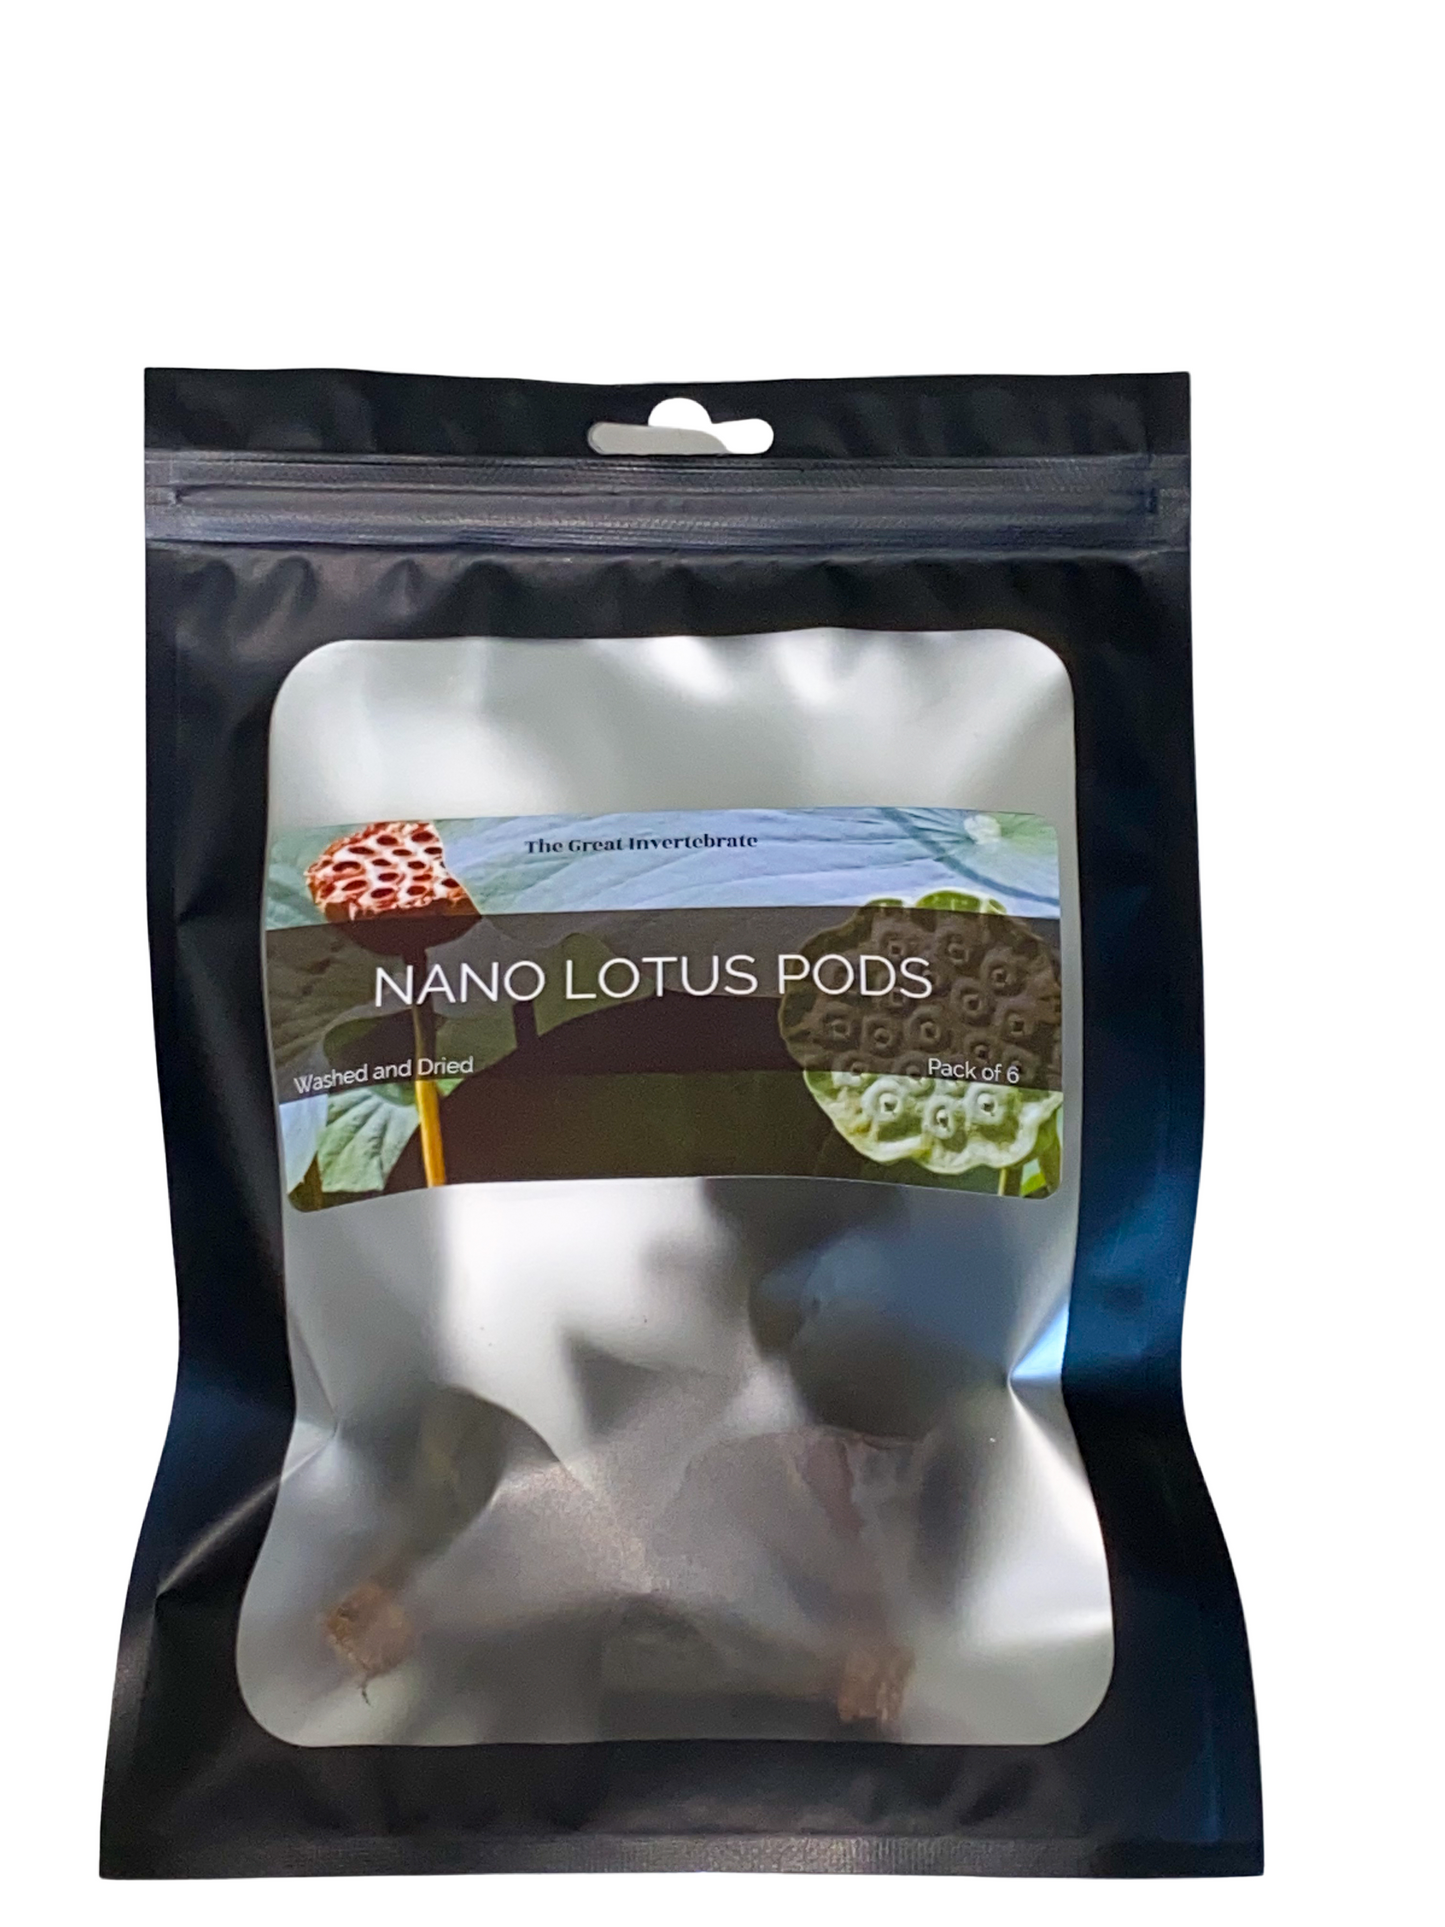 Nano Lotus Pods for Isopods, Shrimp and Other Invertebrates.